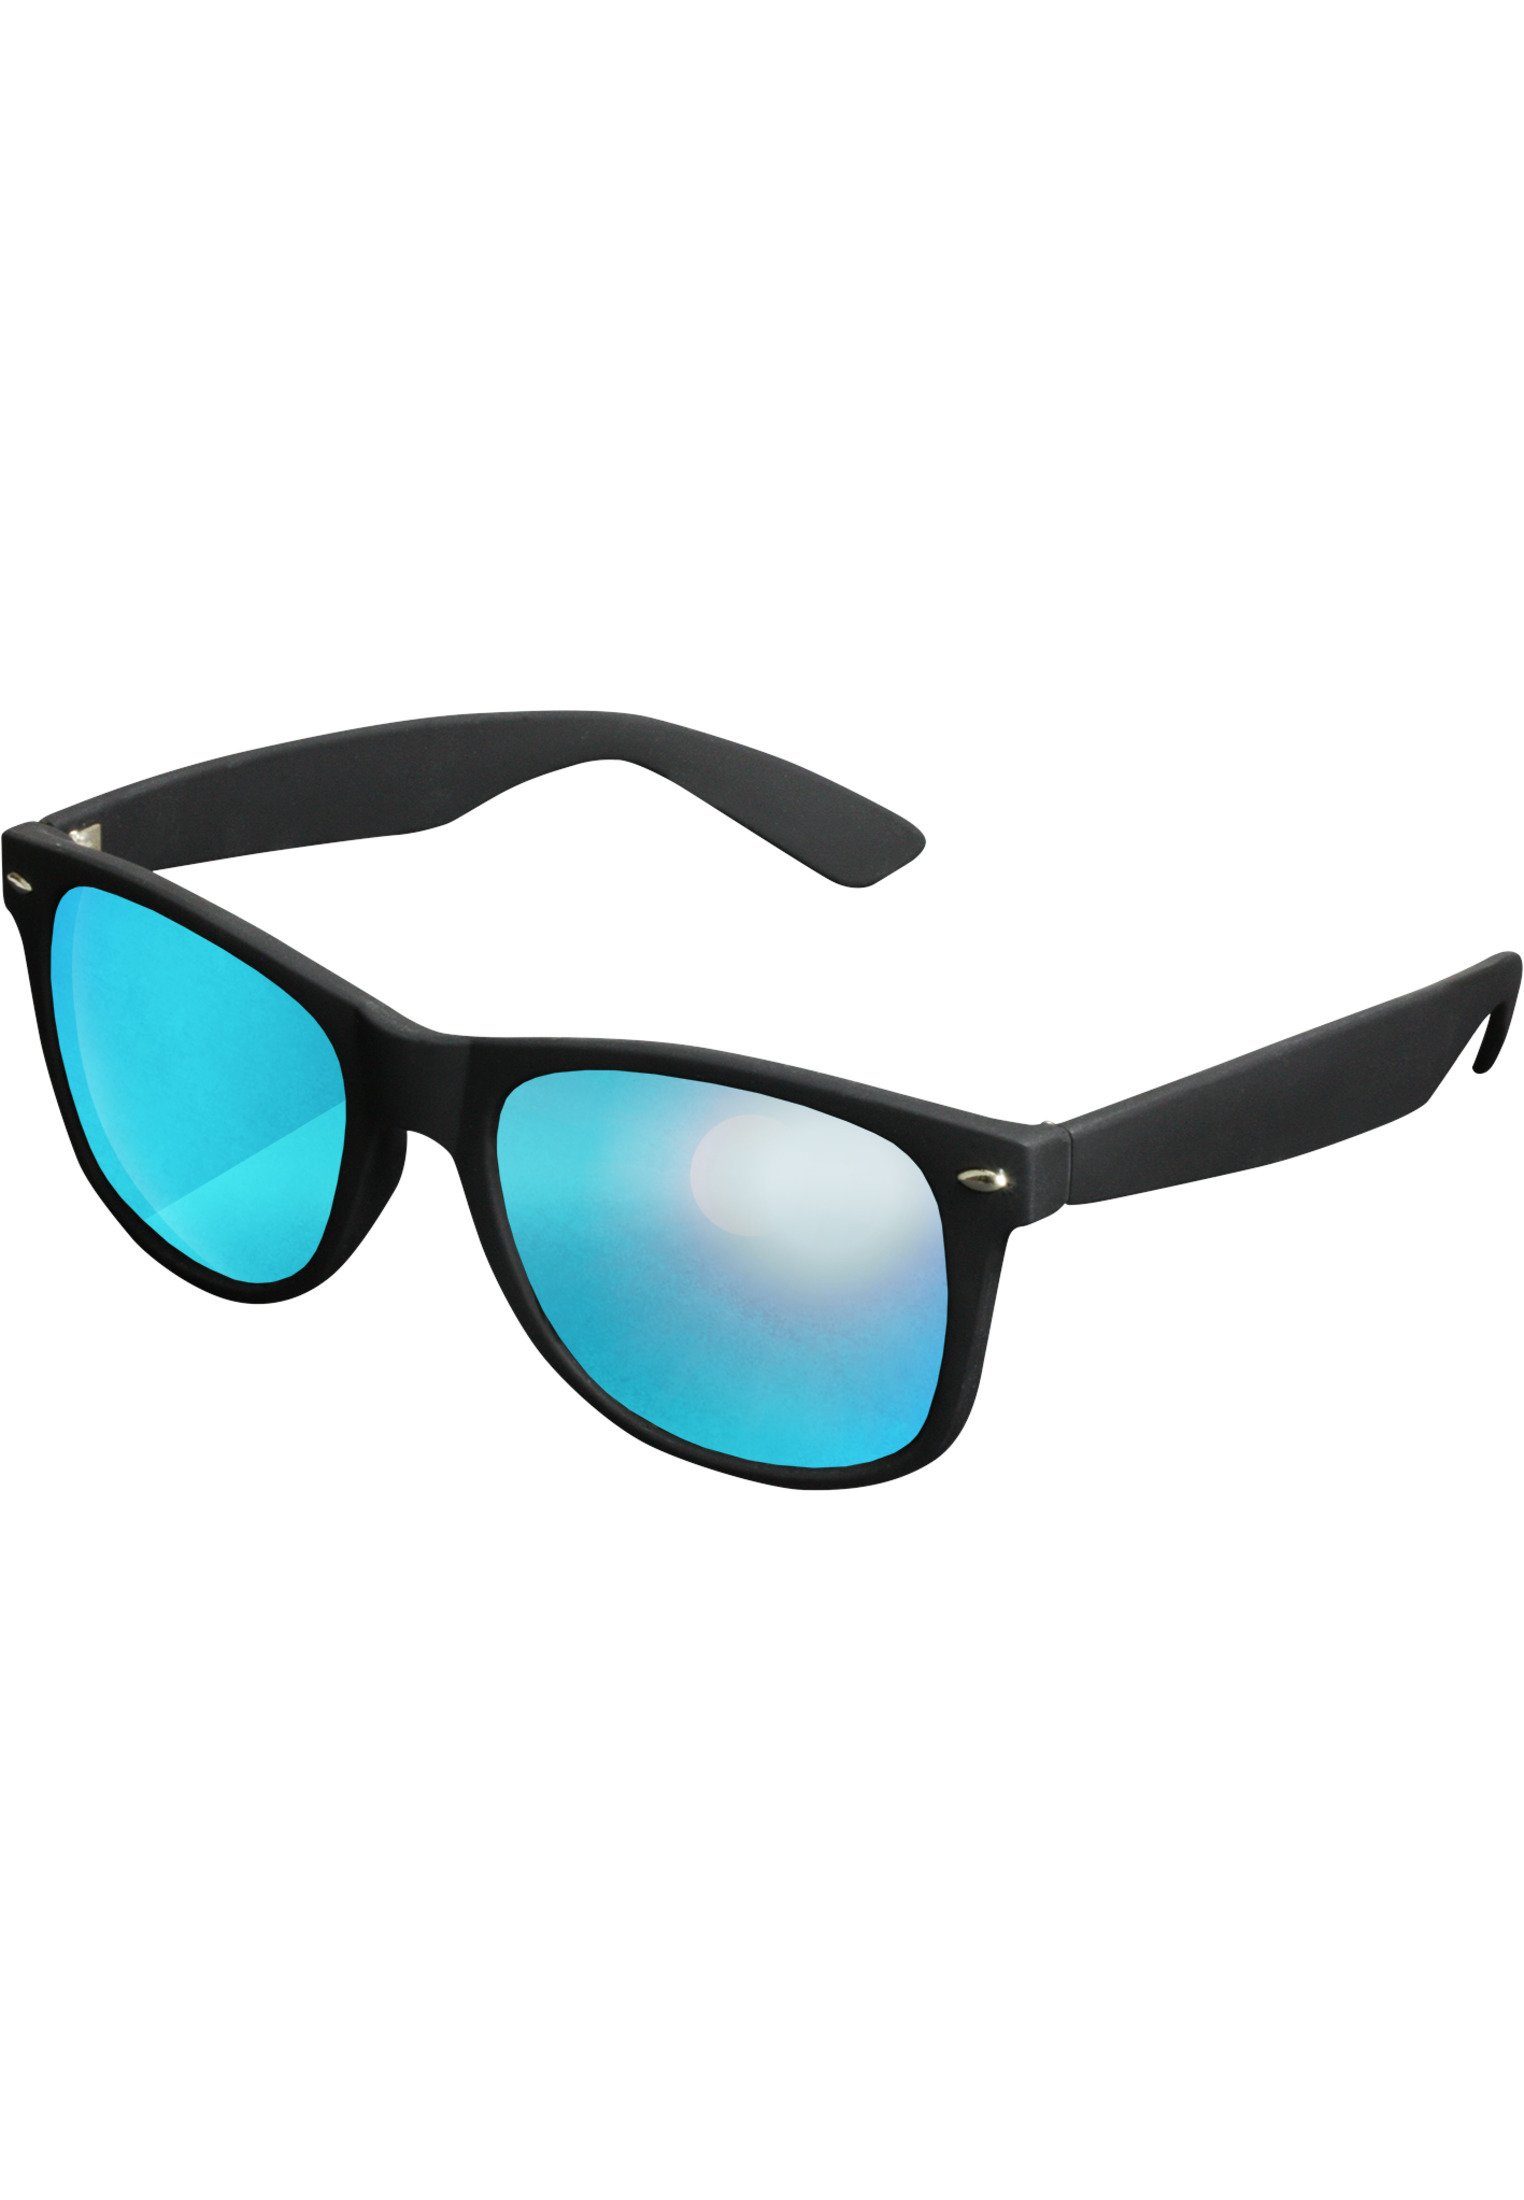 MSTRDS Likoma Sonnenbrille Mirror Sunglasses blk/blue Accessoires